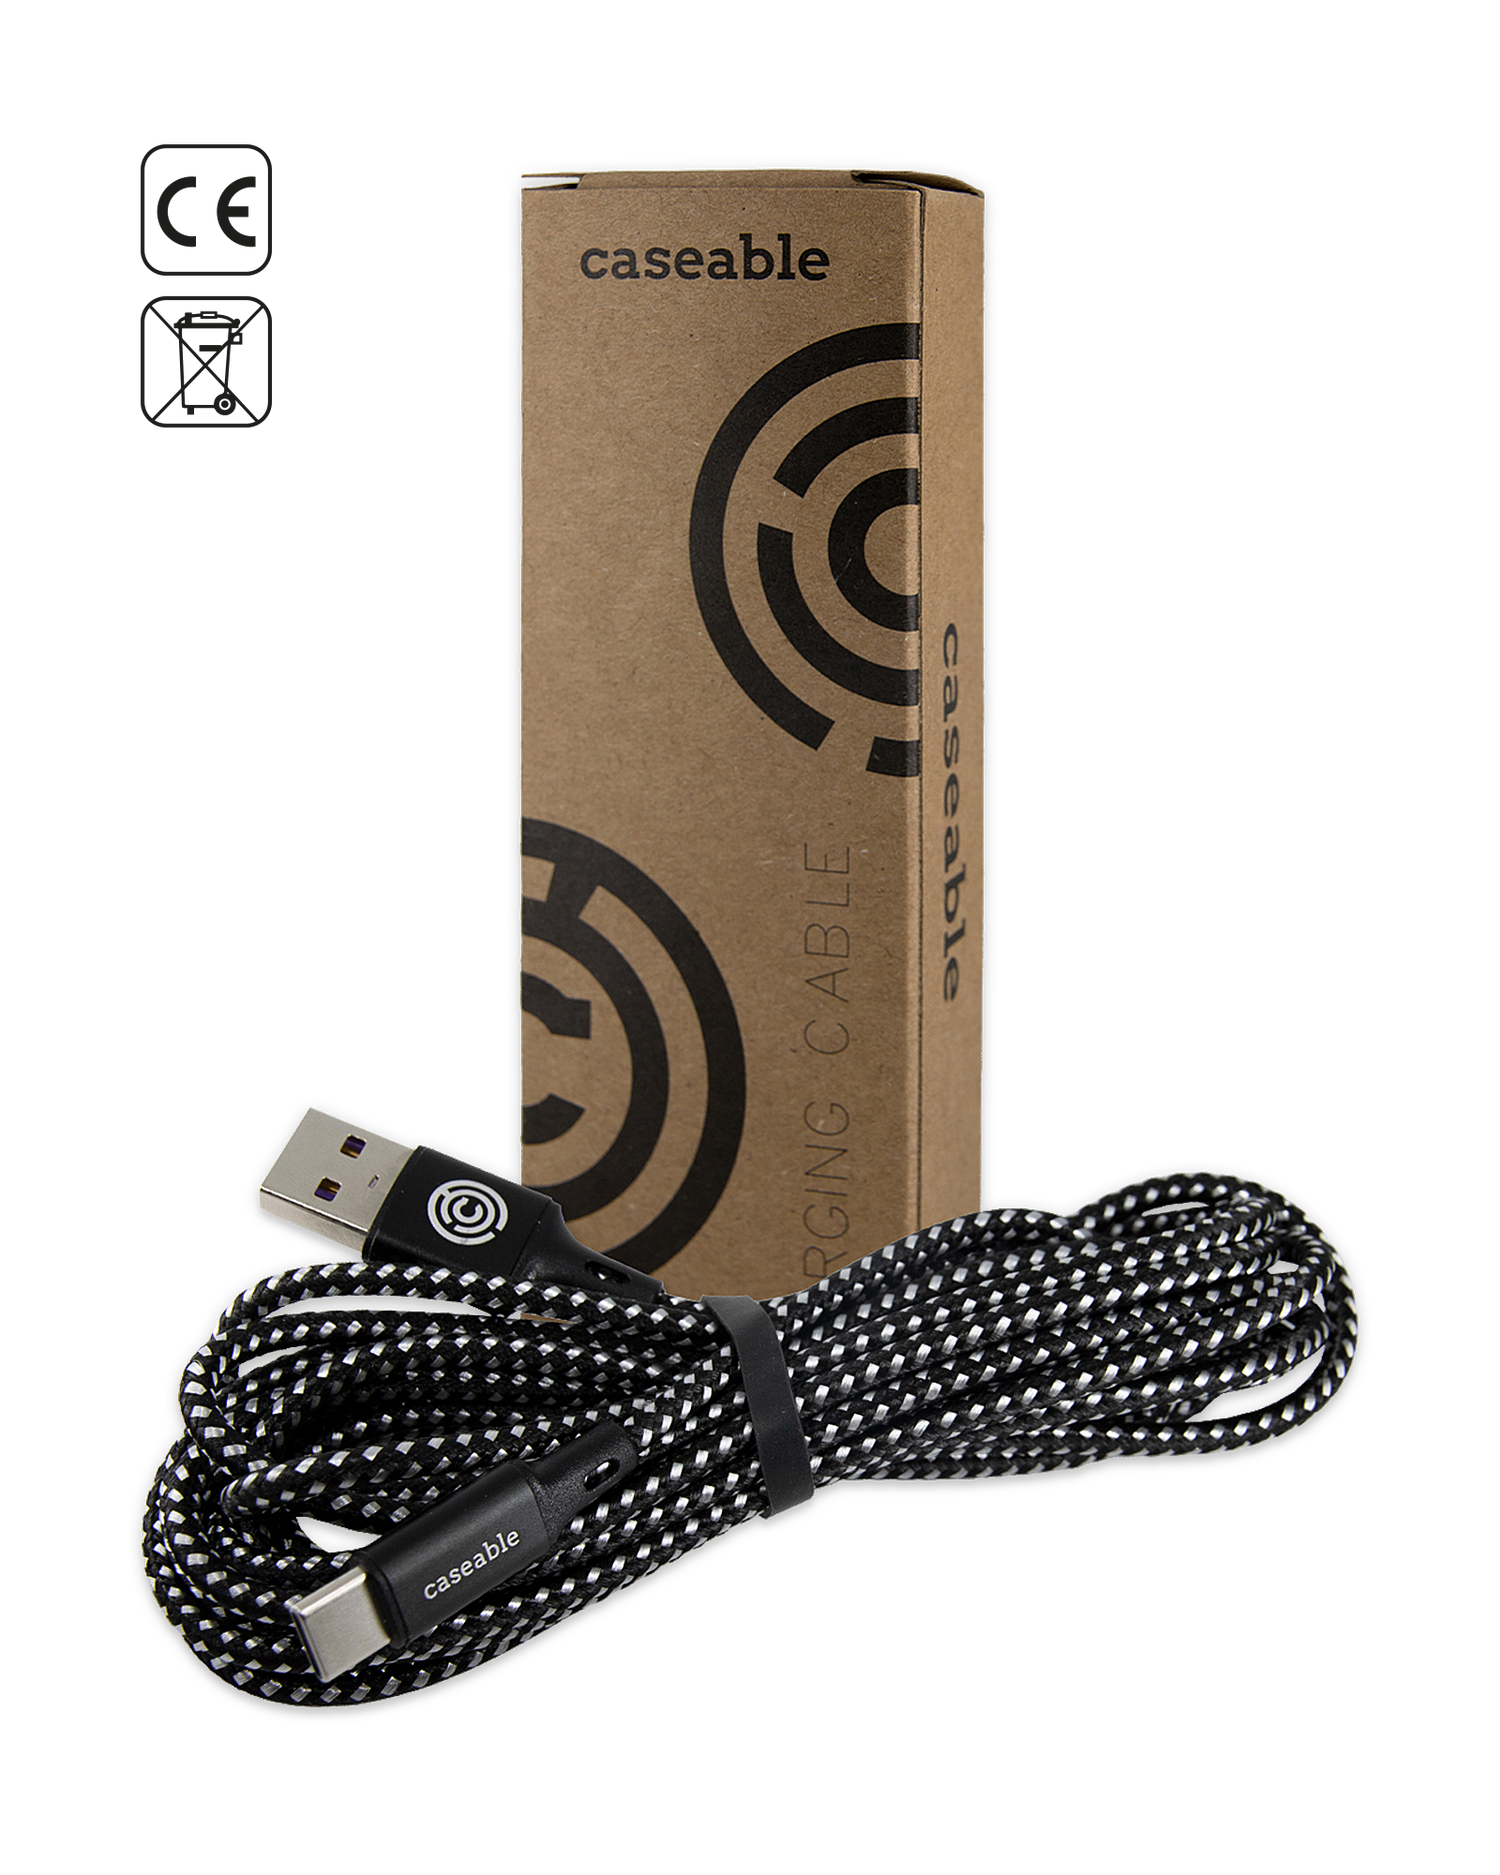 Extra-langes USB-C Kabel mit Verpackung